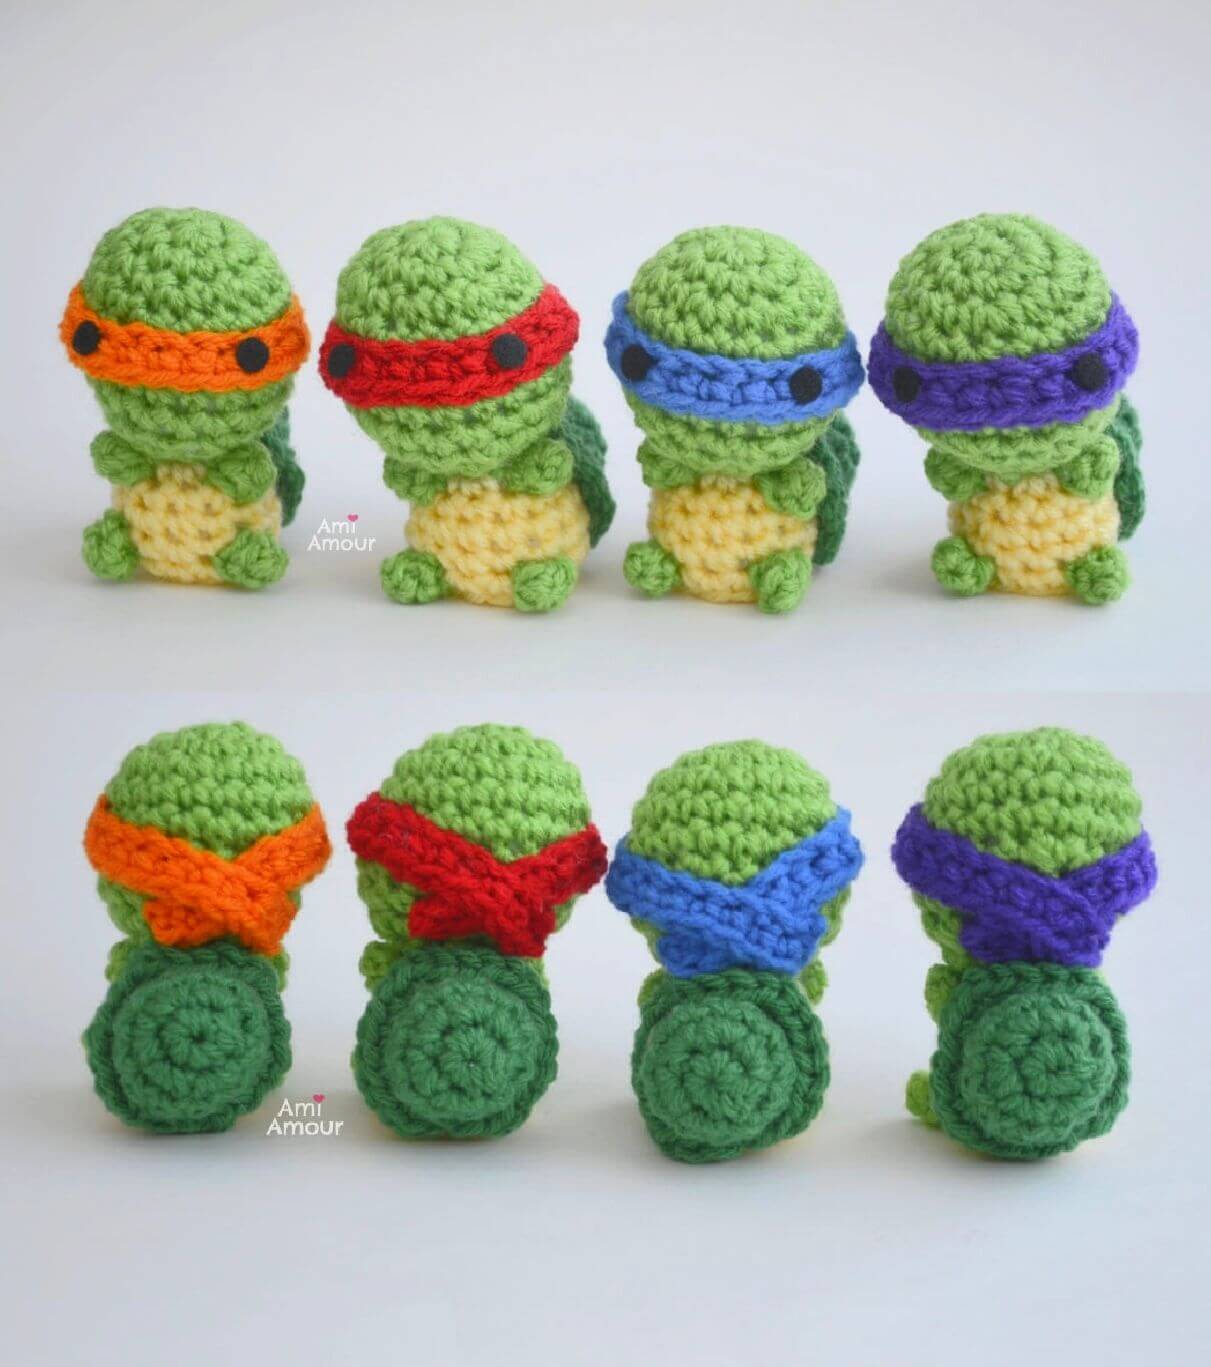 4 Ninja Turtle Amigurumi - Front and Back with colorful bandanas and green shells